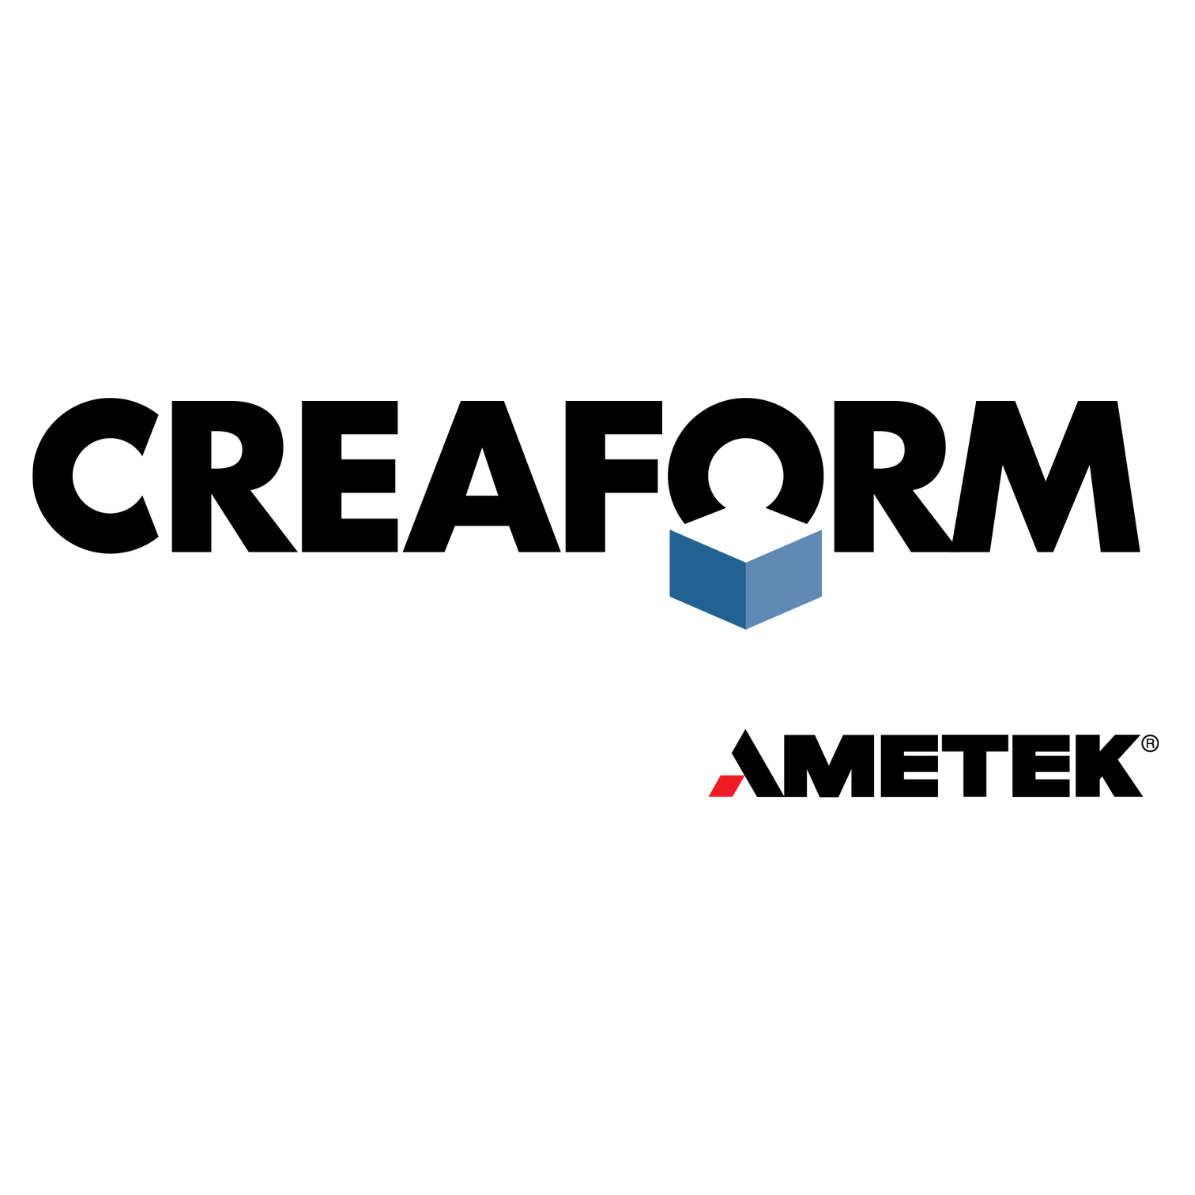 Creaform - Ametek